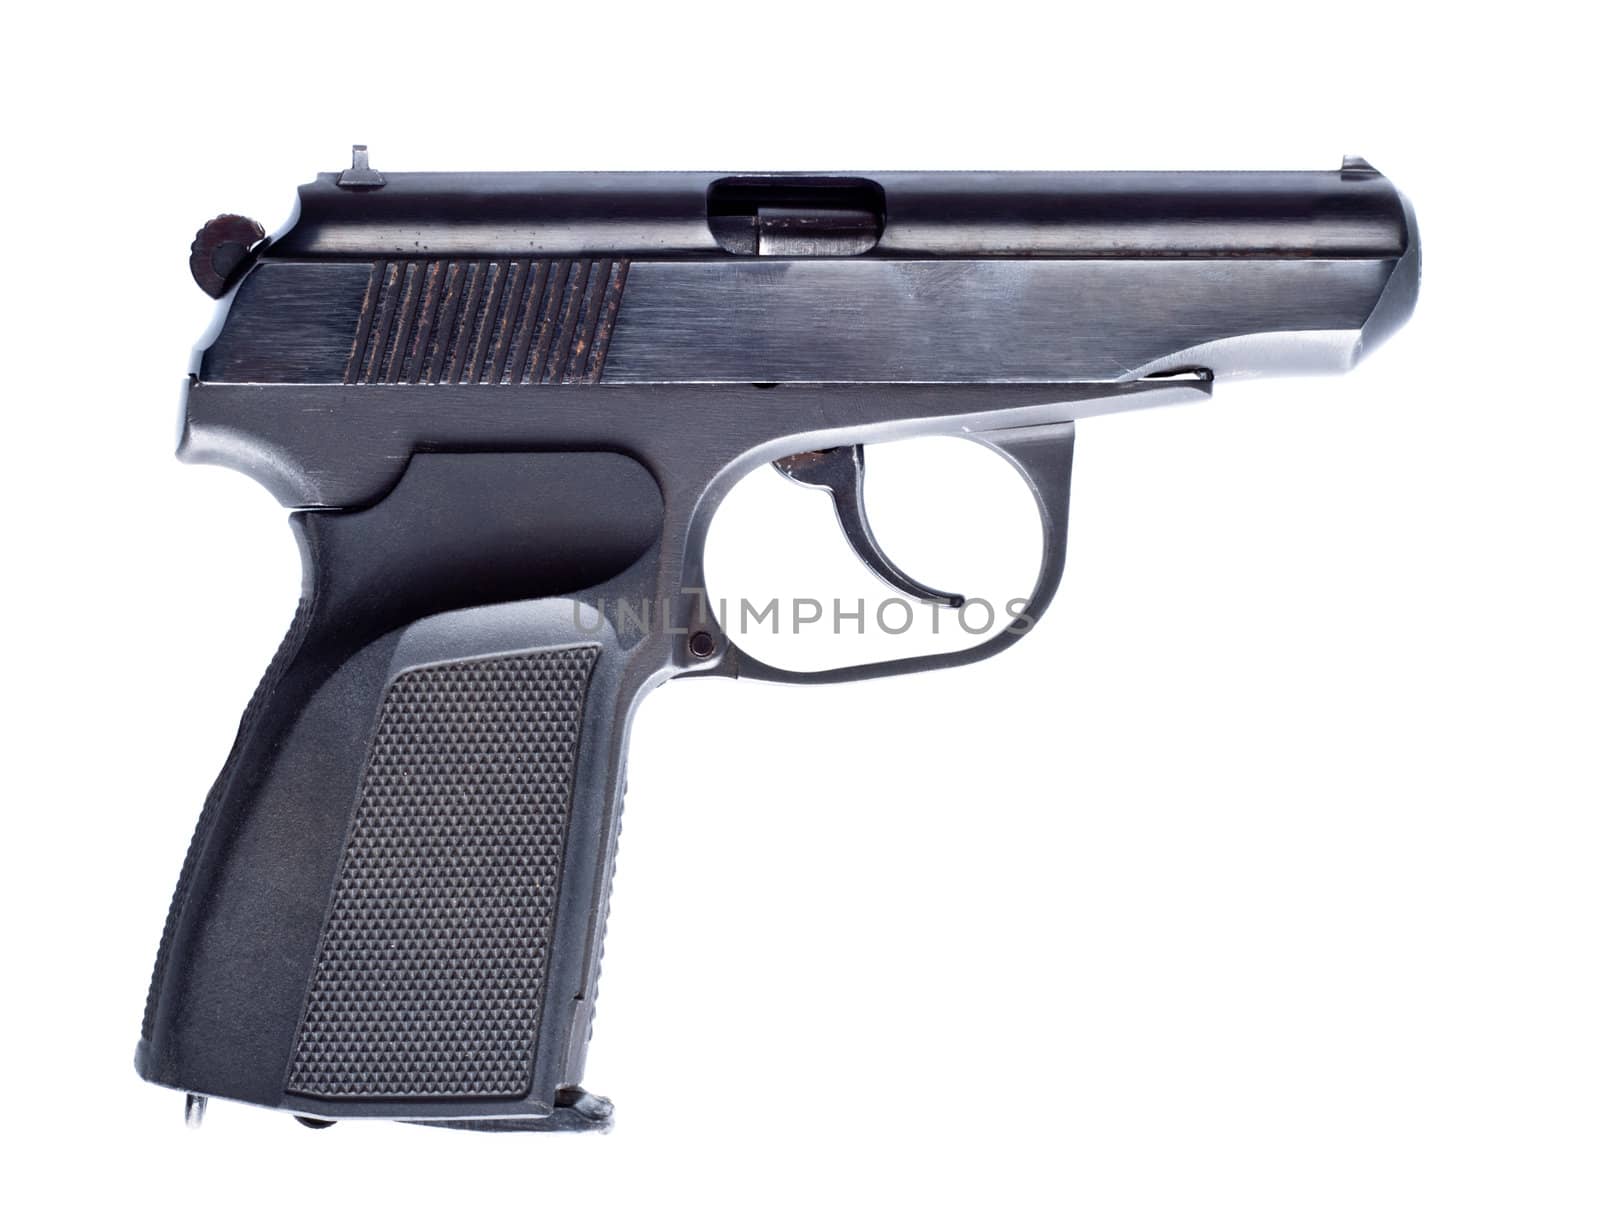 black vintage pistol isolated on white